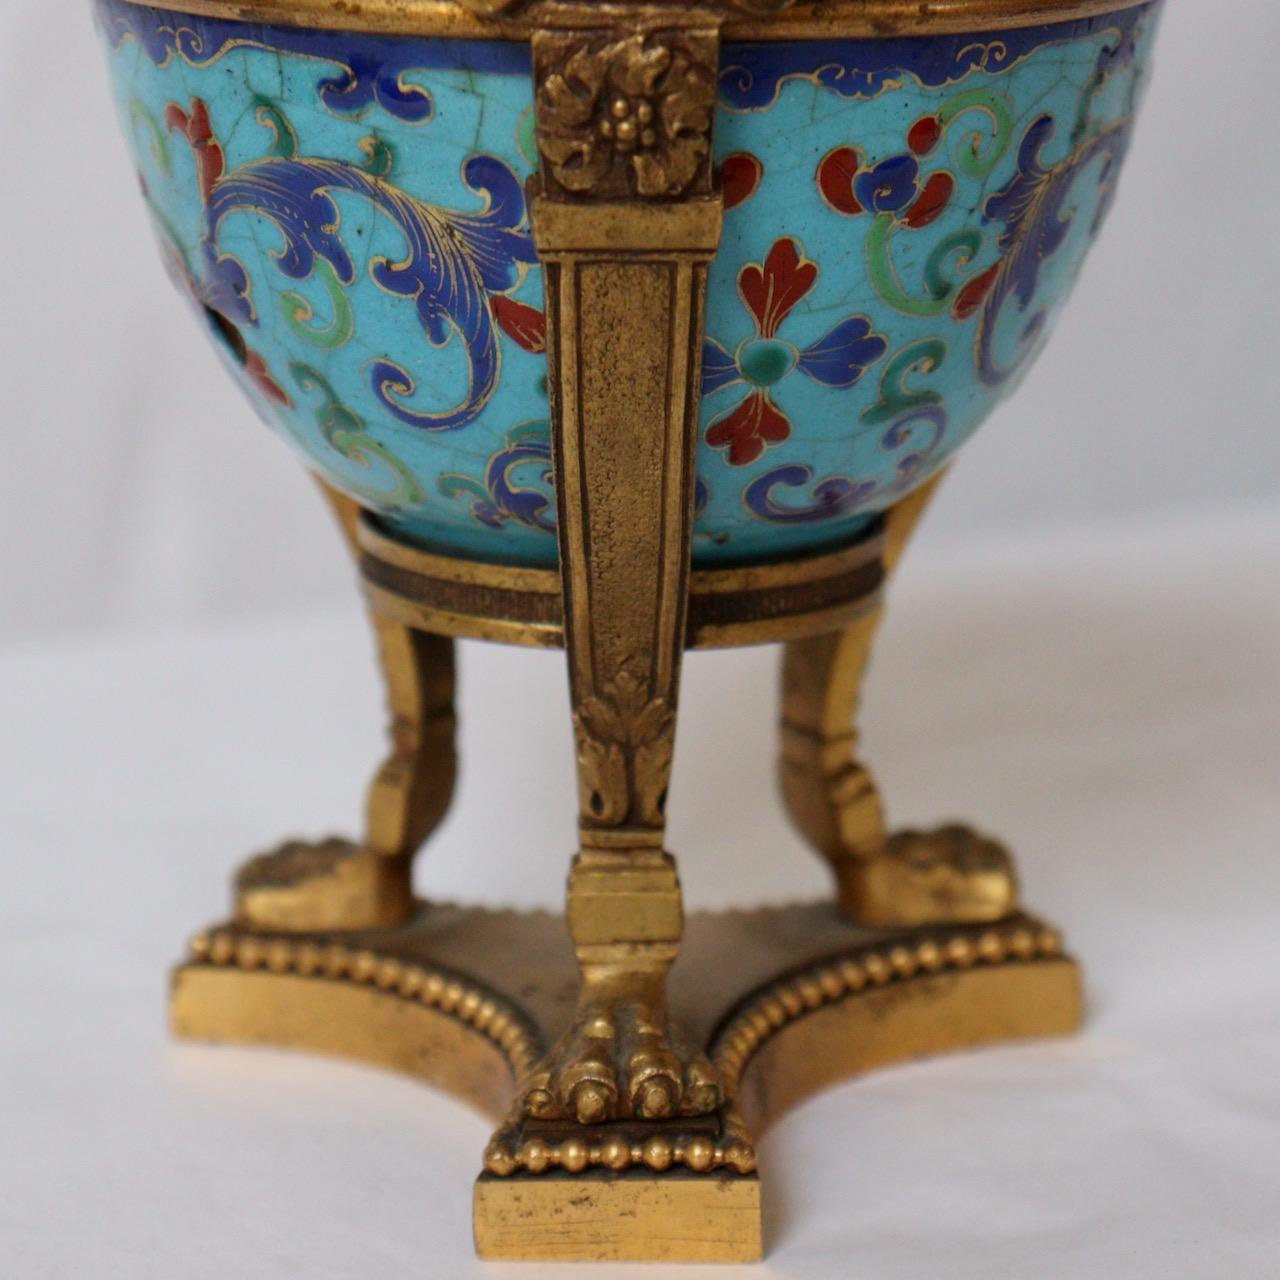 Vase aus gebürstetem Parfüm oder Topf Pourri aus dem 19. Jahrhundert (Spätes 19. Jahrhundert)